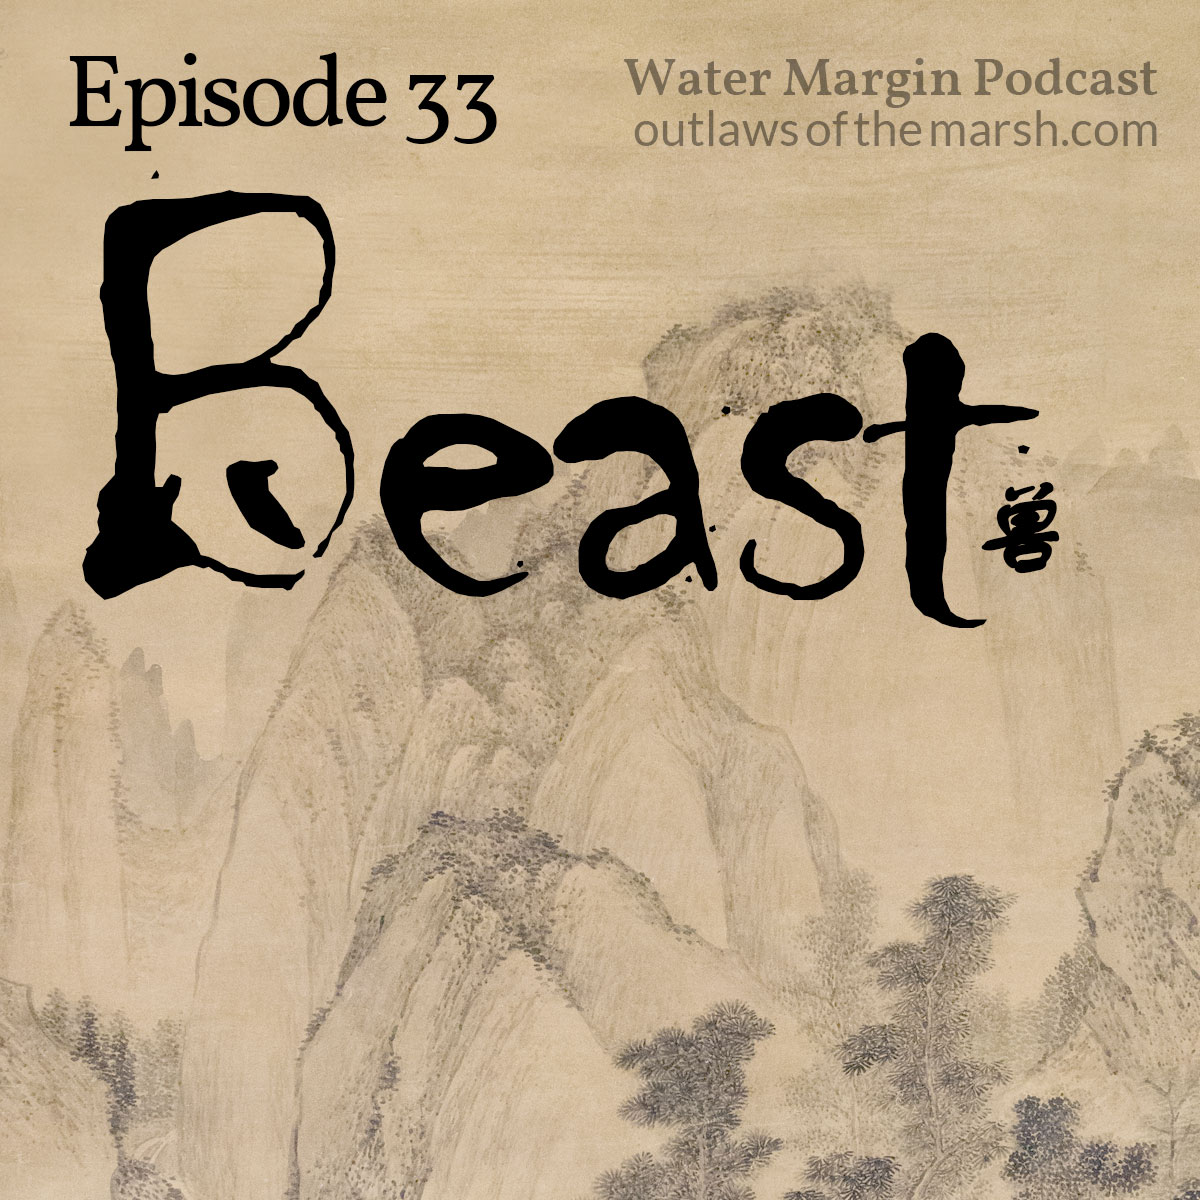 Water Margin Podcast: Episode 033